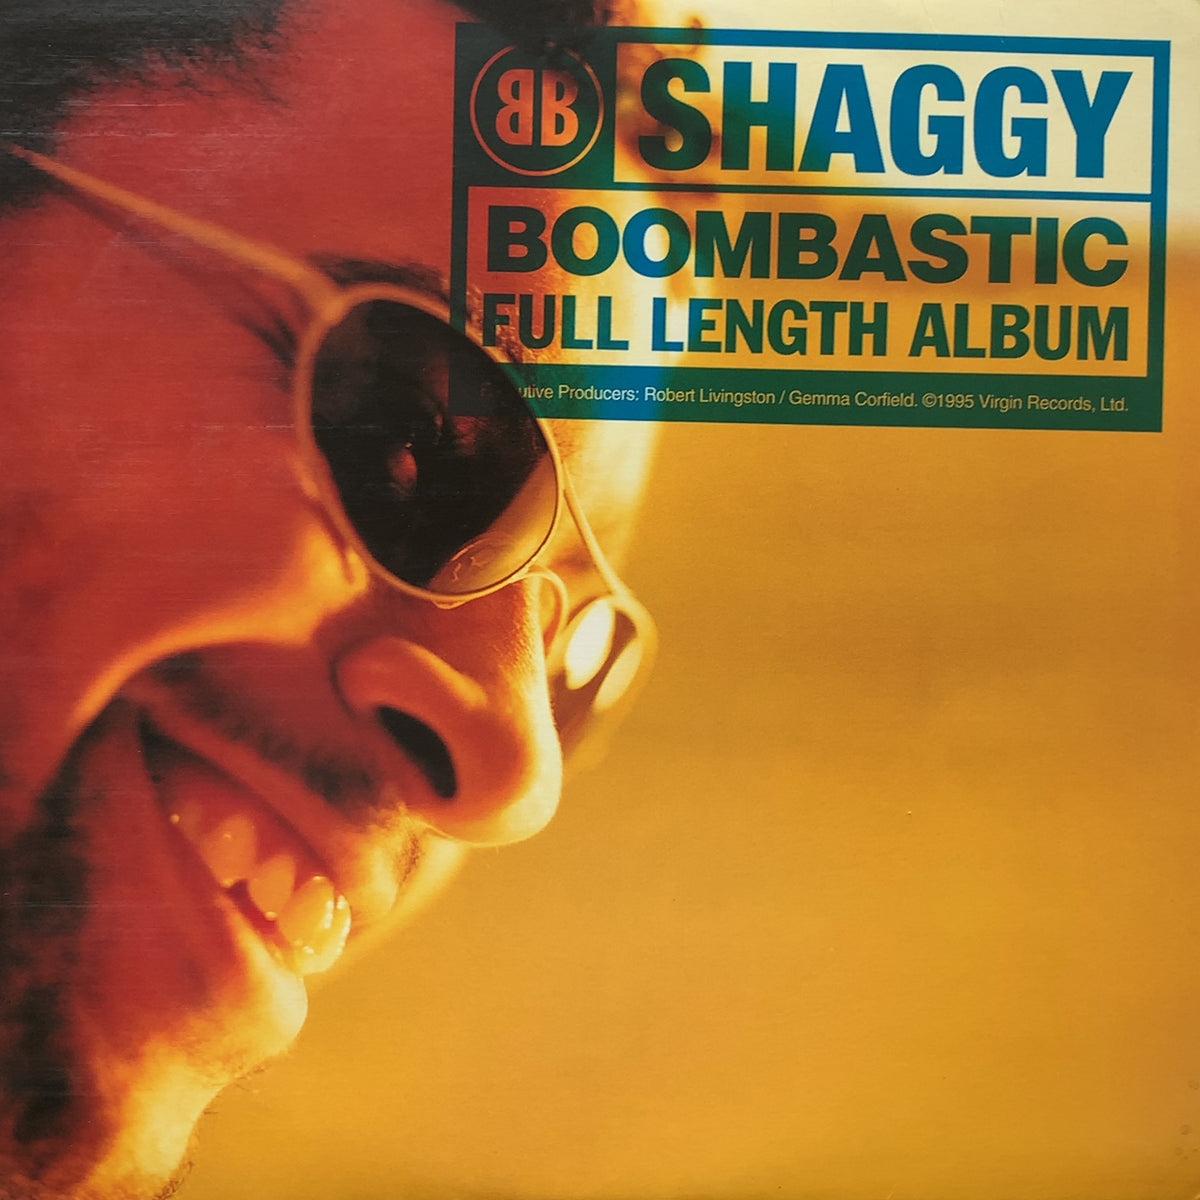 SHAGGY / Boombastic (Full Length Album) 7243 8 40158 1 7